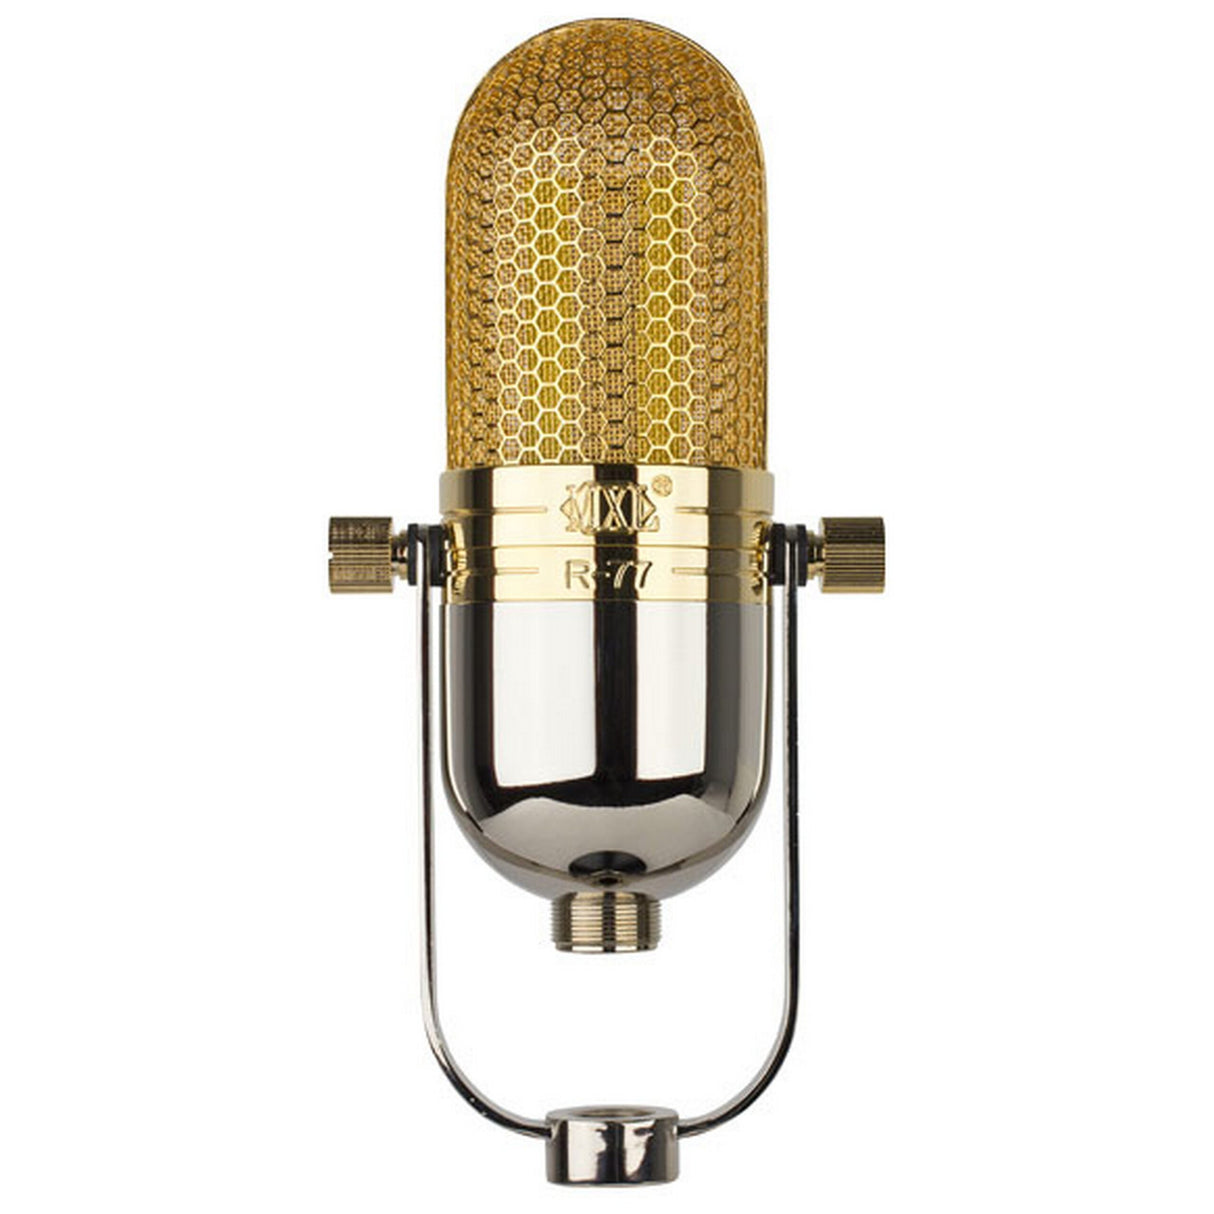 MXL R77 | Classic Ribbon Studio Vocal Recording Microphone